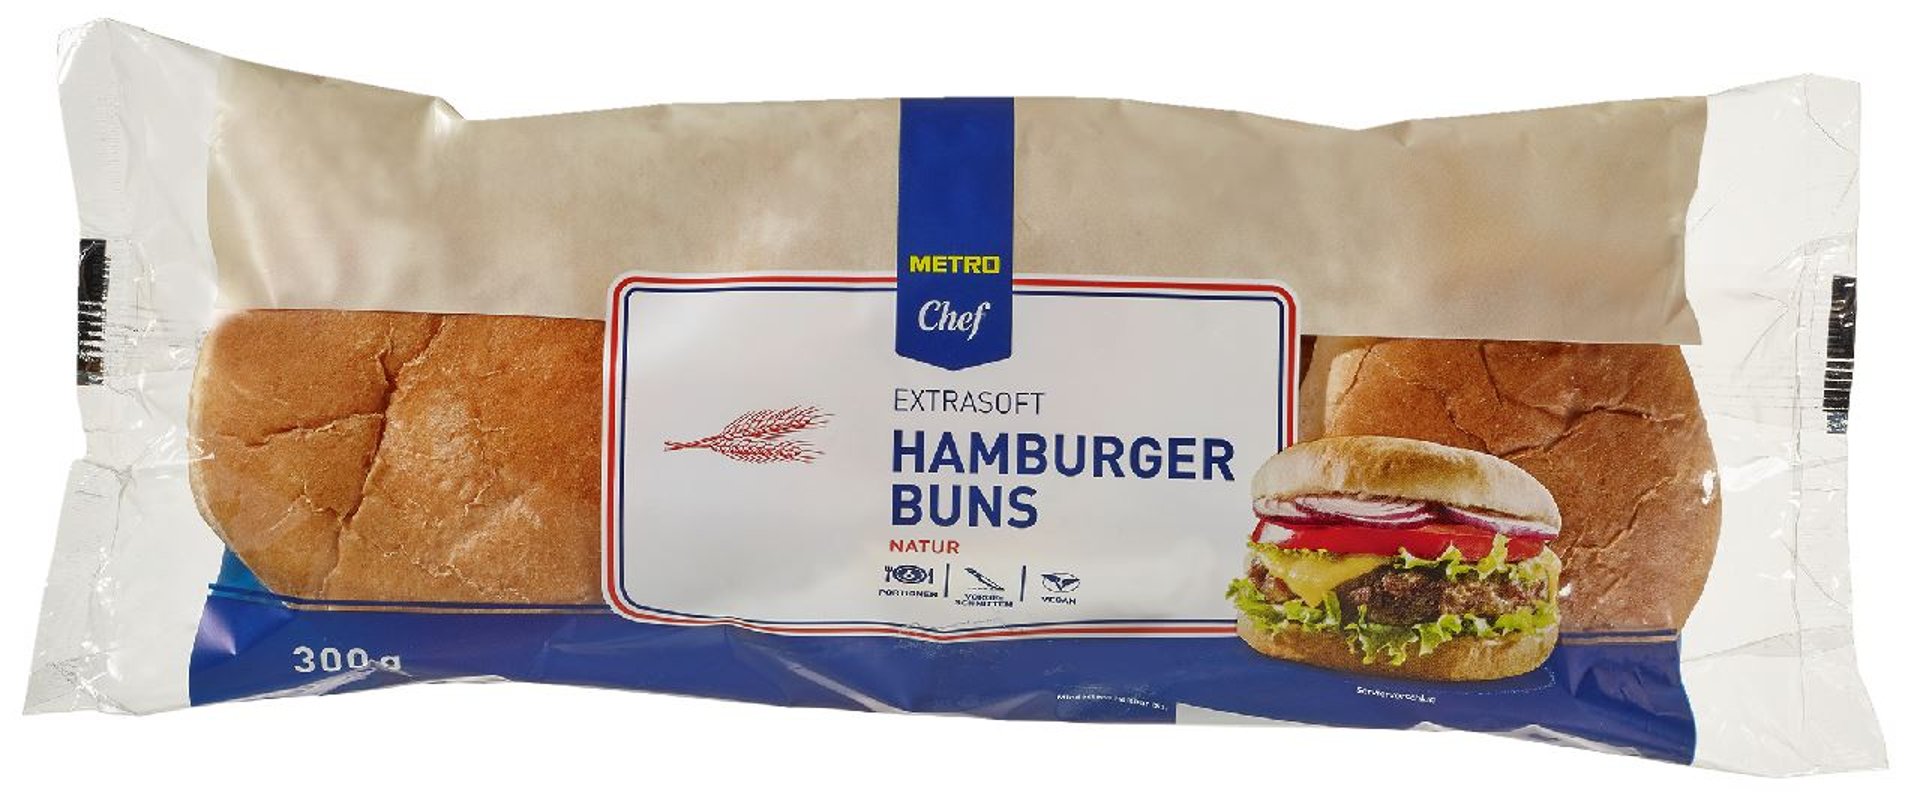 METRO Chef - Hamburger Buns Natur 6 Stück à 50 g - 300 g Packung